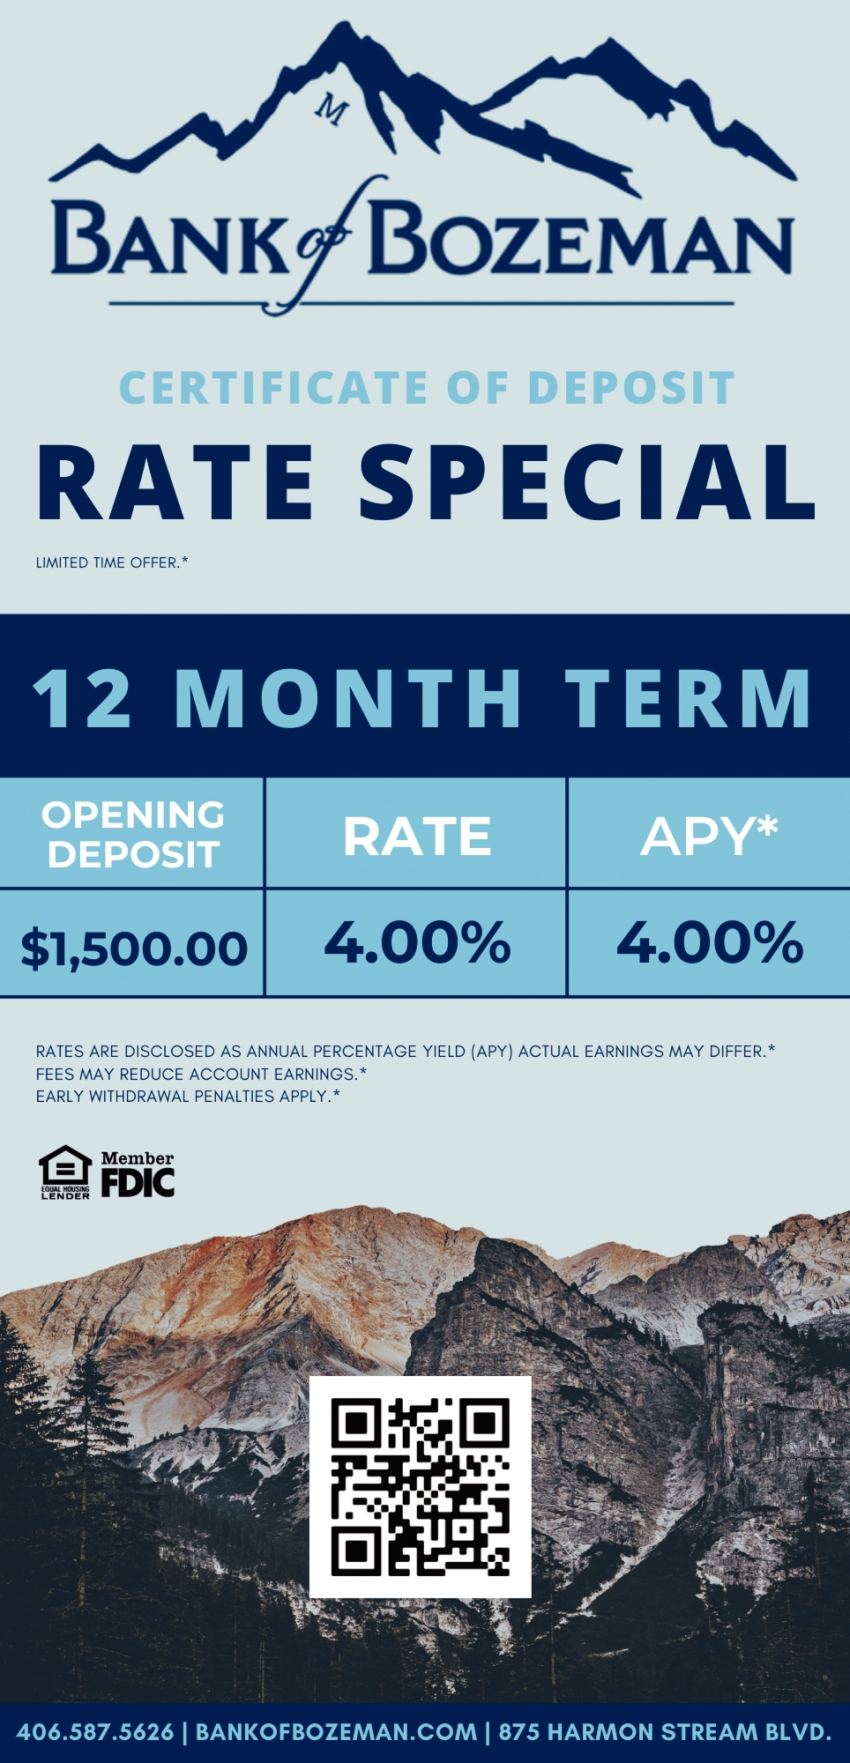 Certificate of Deposit Rate Special